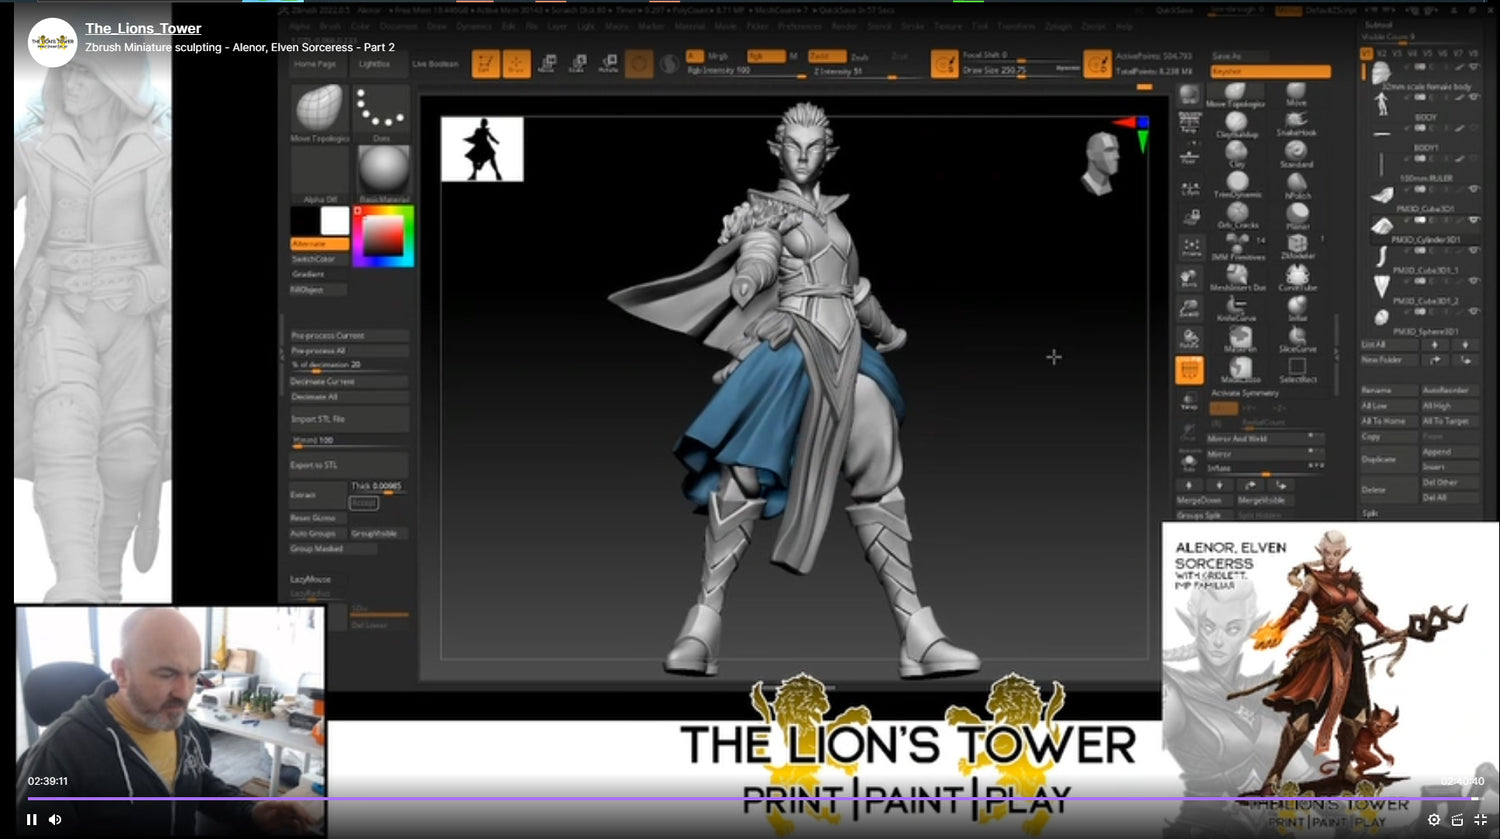 A screen grab of Dan sculpting Alenor the Elven Sorceress live on Twitch